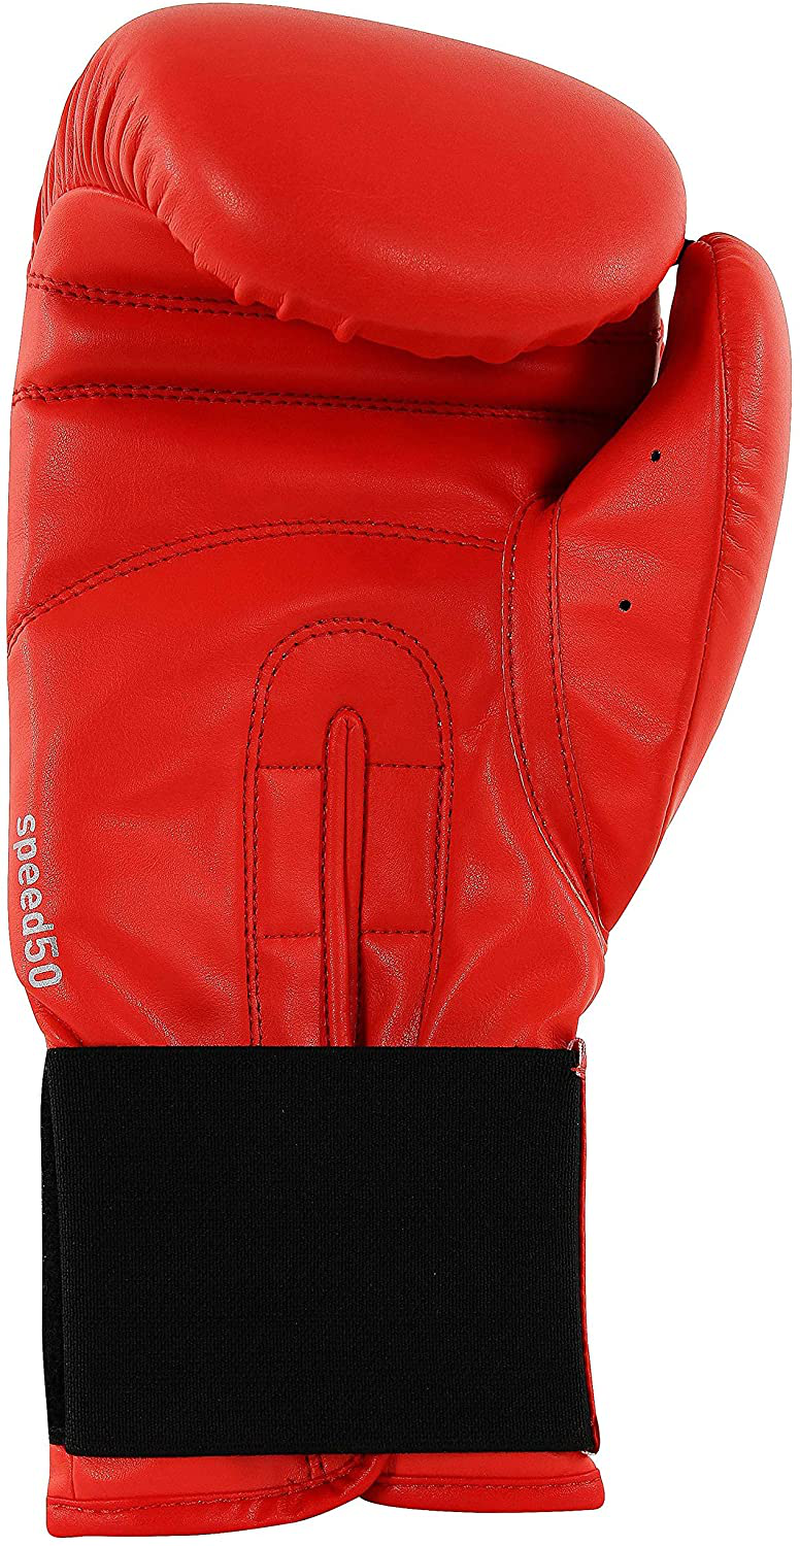 adidas Boxing Gloves - Speed 50 Boxing & Kickboxing - Boxing Gloves Women/Boxing Gloves for Men - Boxing Equipment